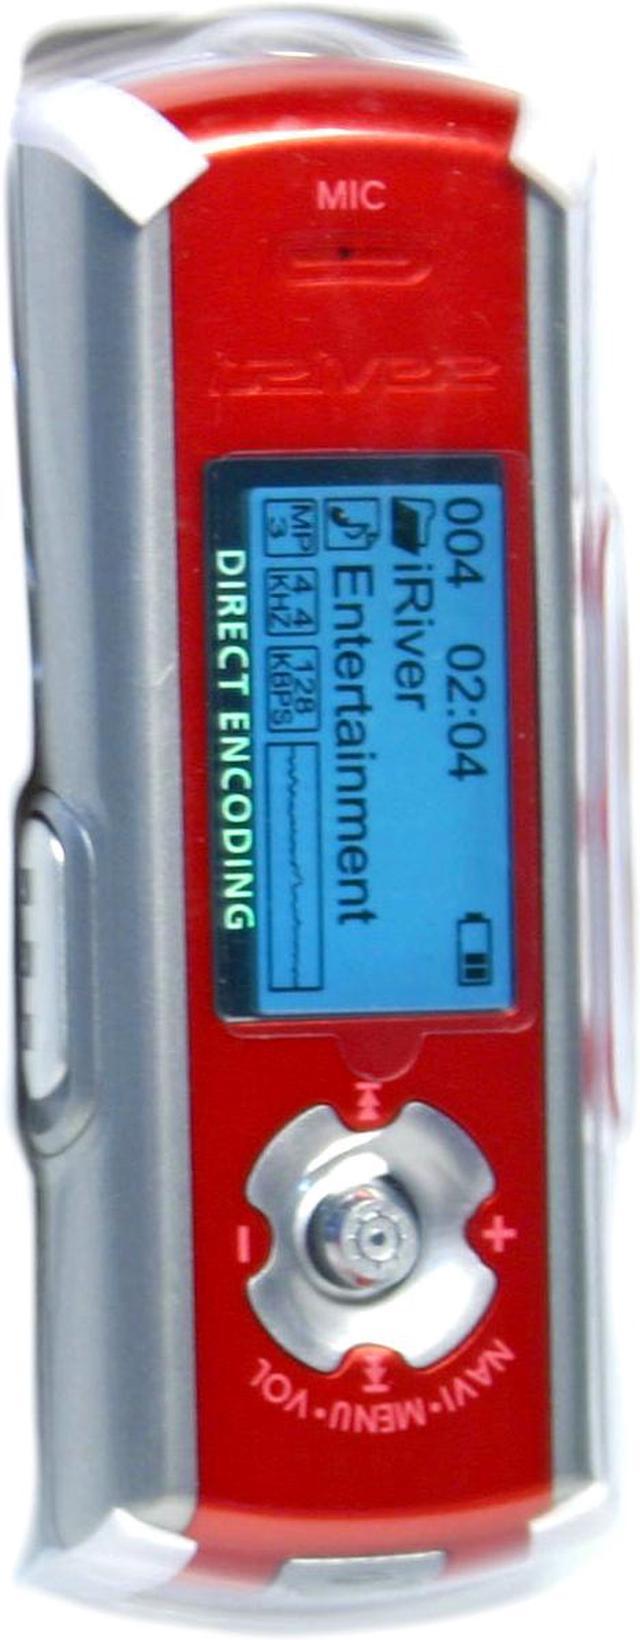 iRiver Red 256MB MP3 Player IFP-790 - Newegg.com